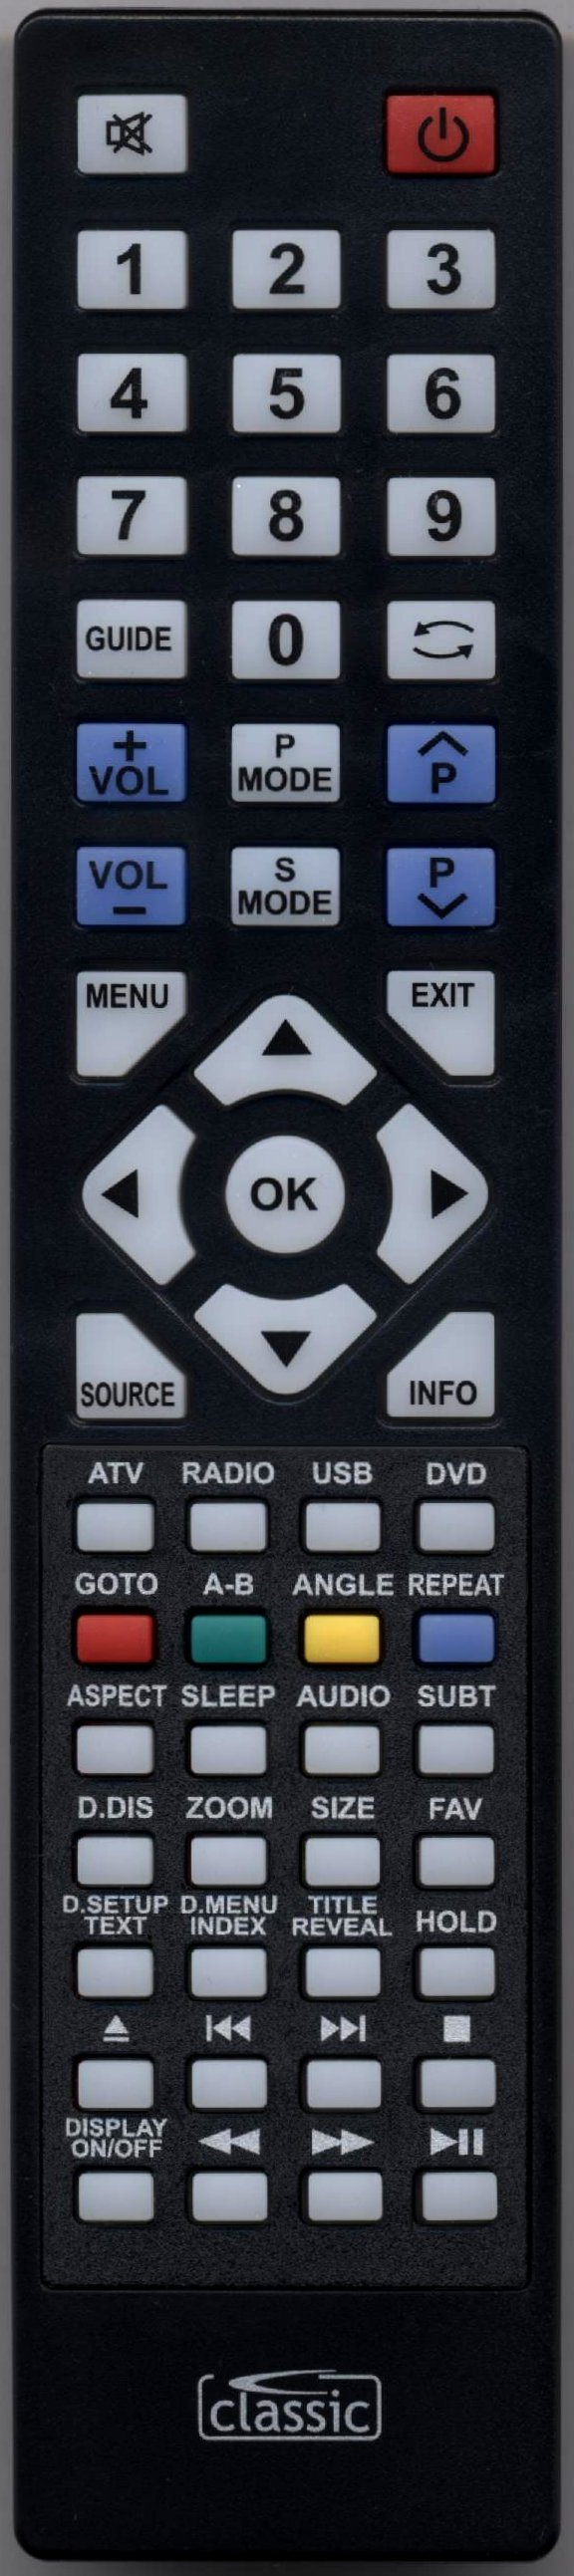 UMC - M32/57G Alternative Remote Control